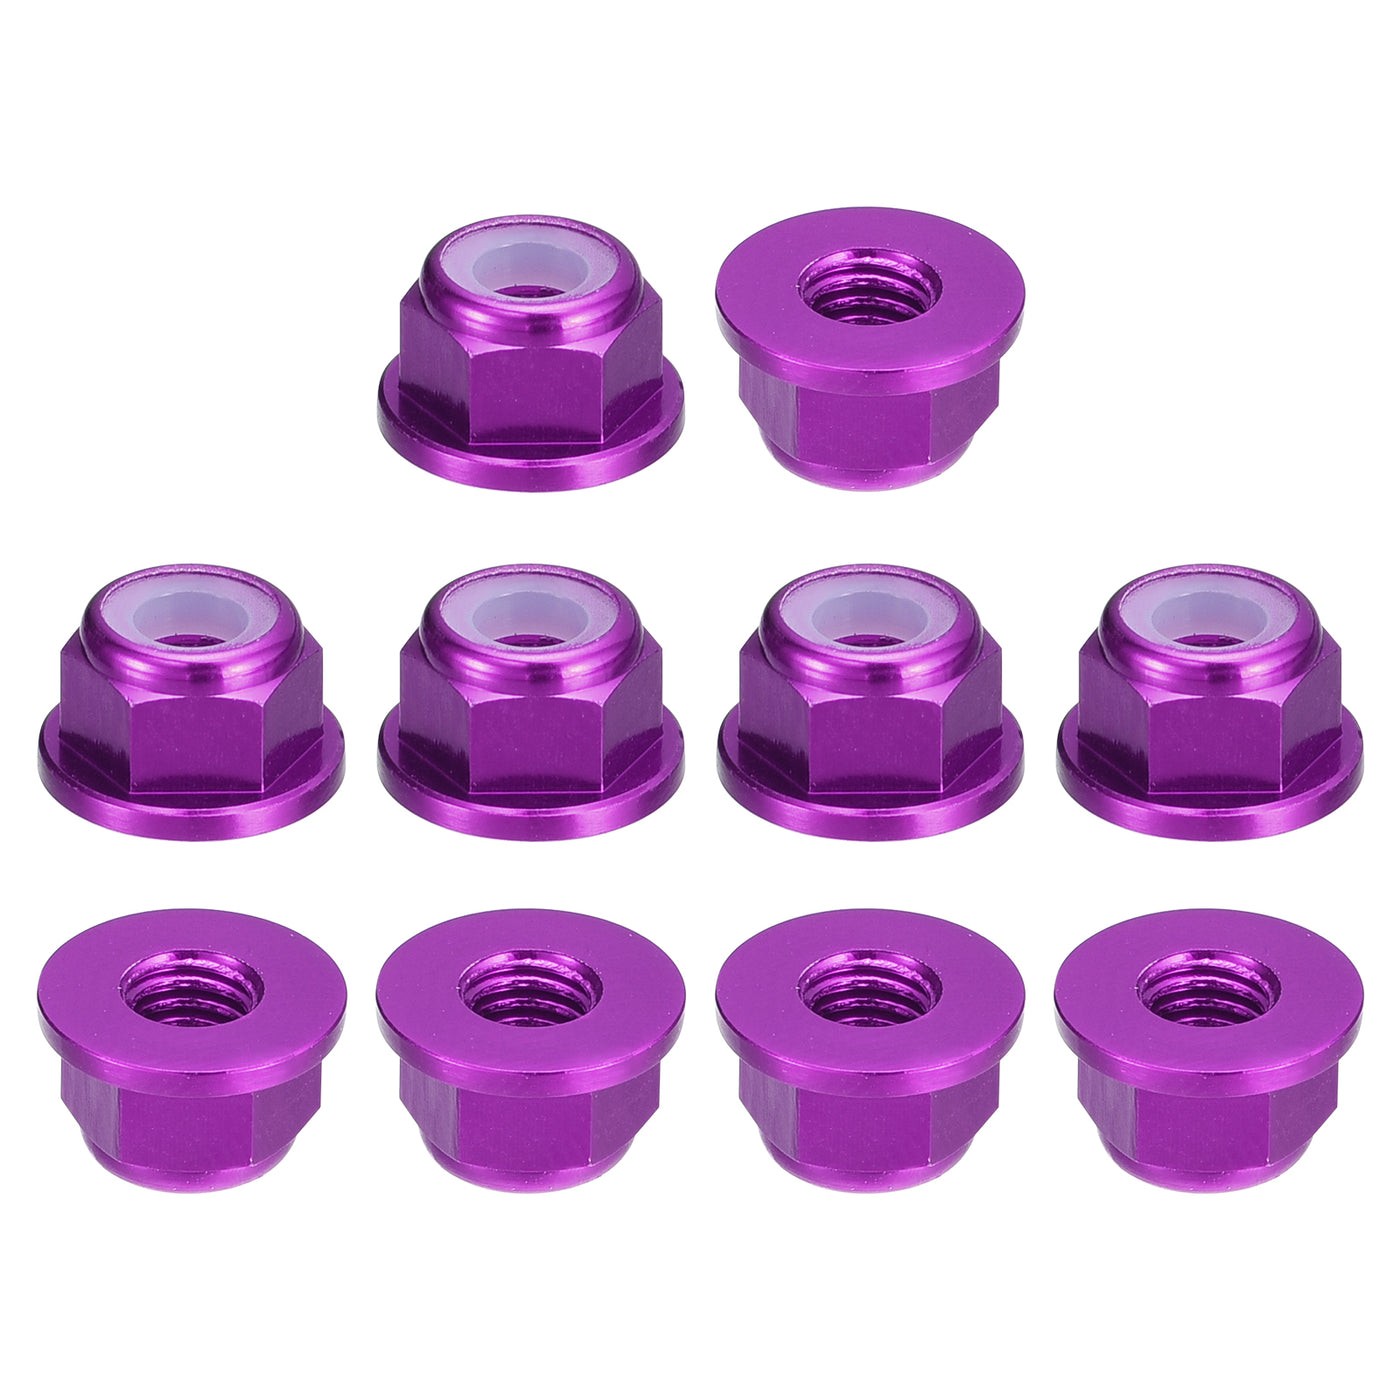 uxcell Uxcell Nylon Insert Hex Lock Nuts, 10pcs - M4 x 0.7mm Aluminum Alloy Self-Locking Nut, Anodizing Flange Lock Nut for Fasteners (Purple)